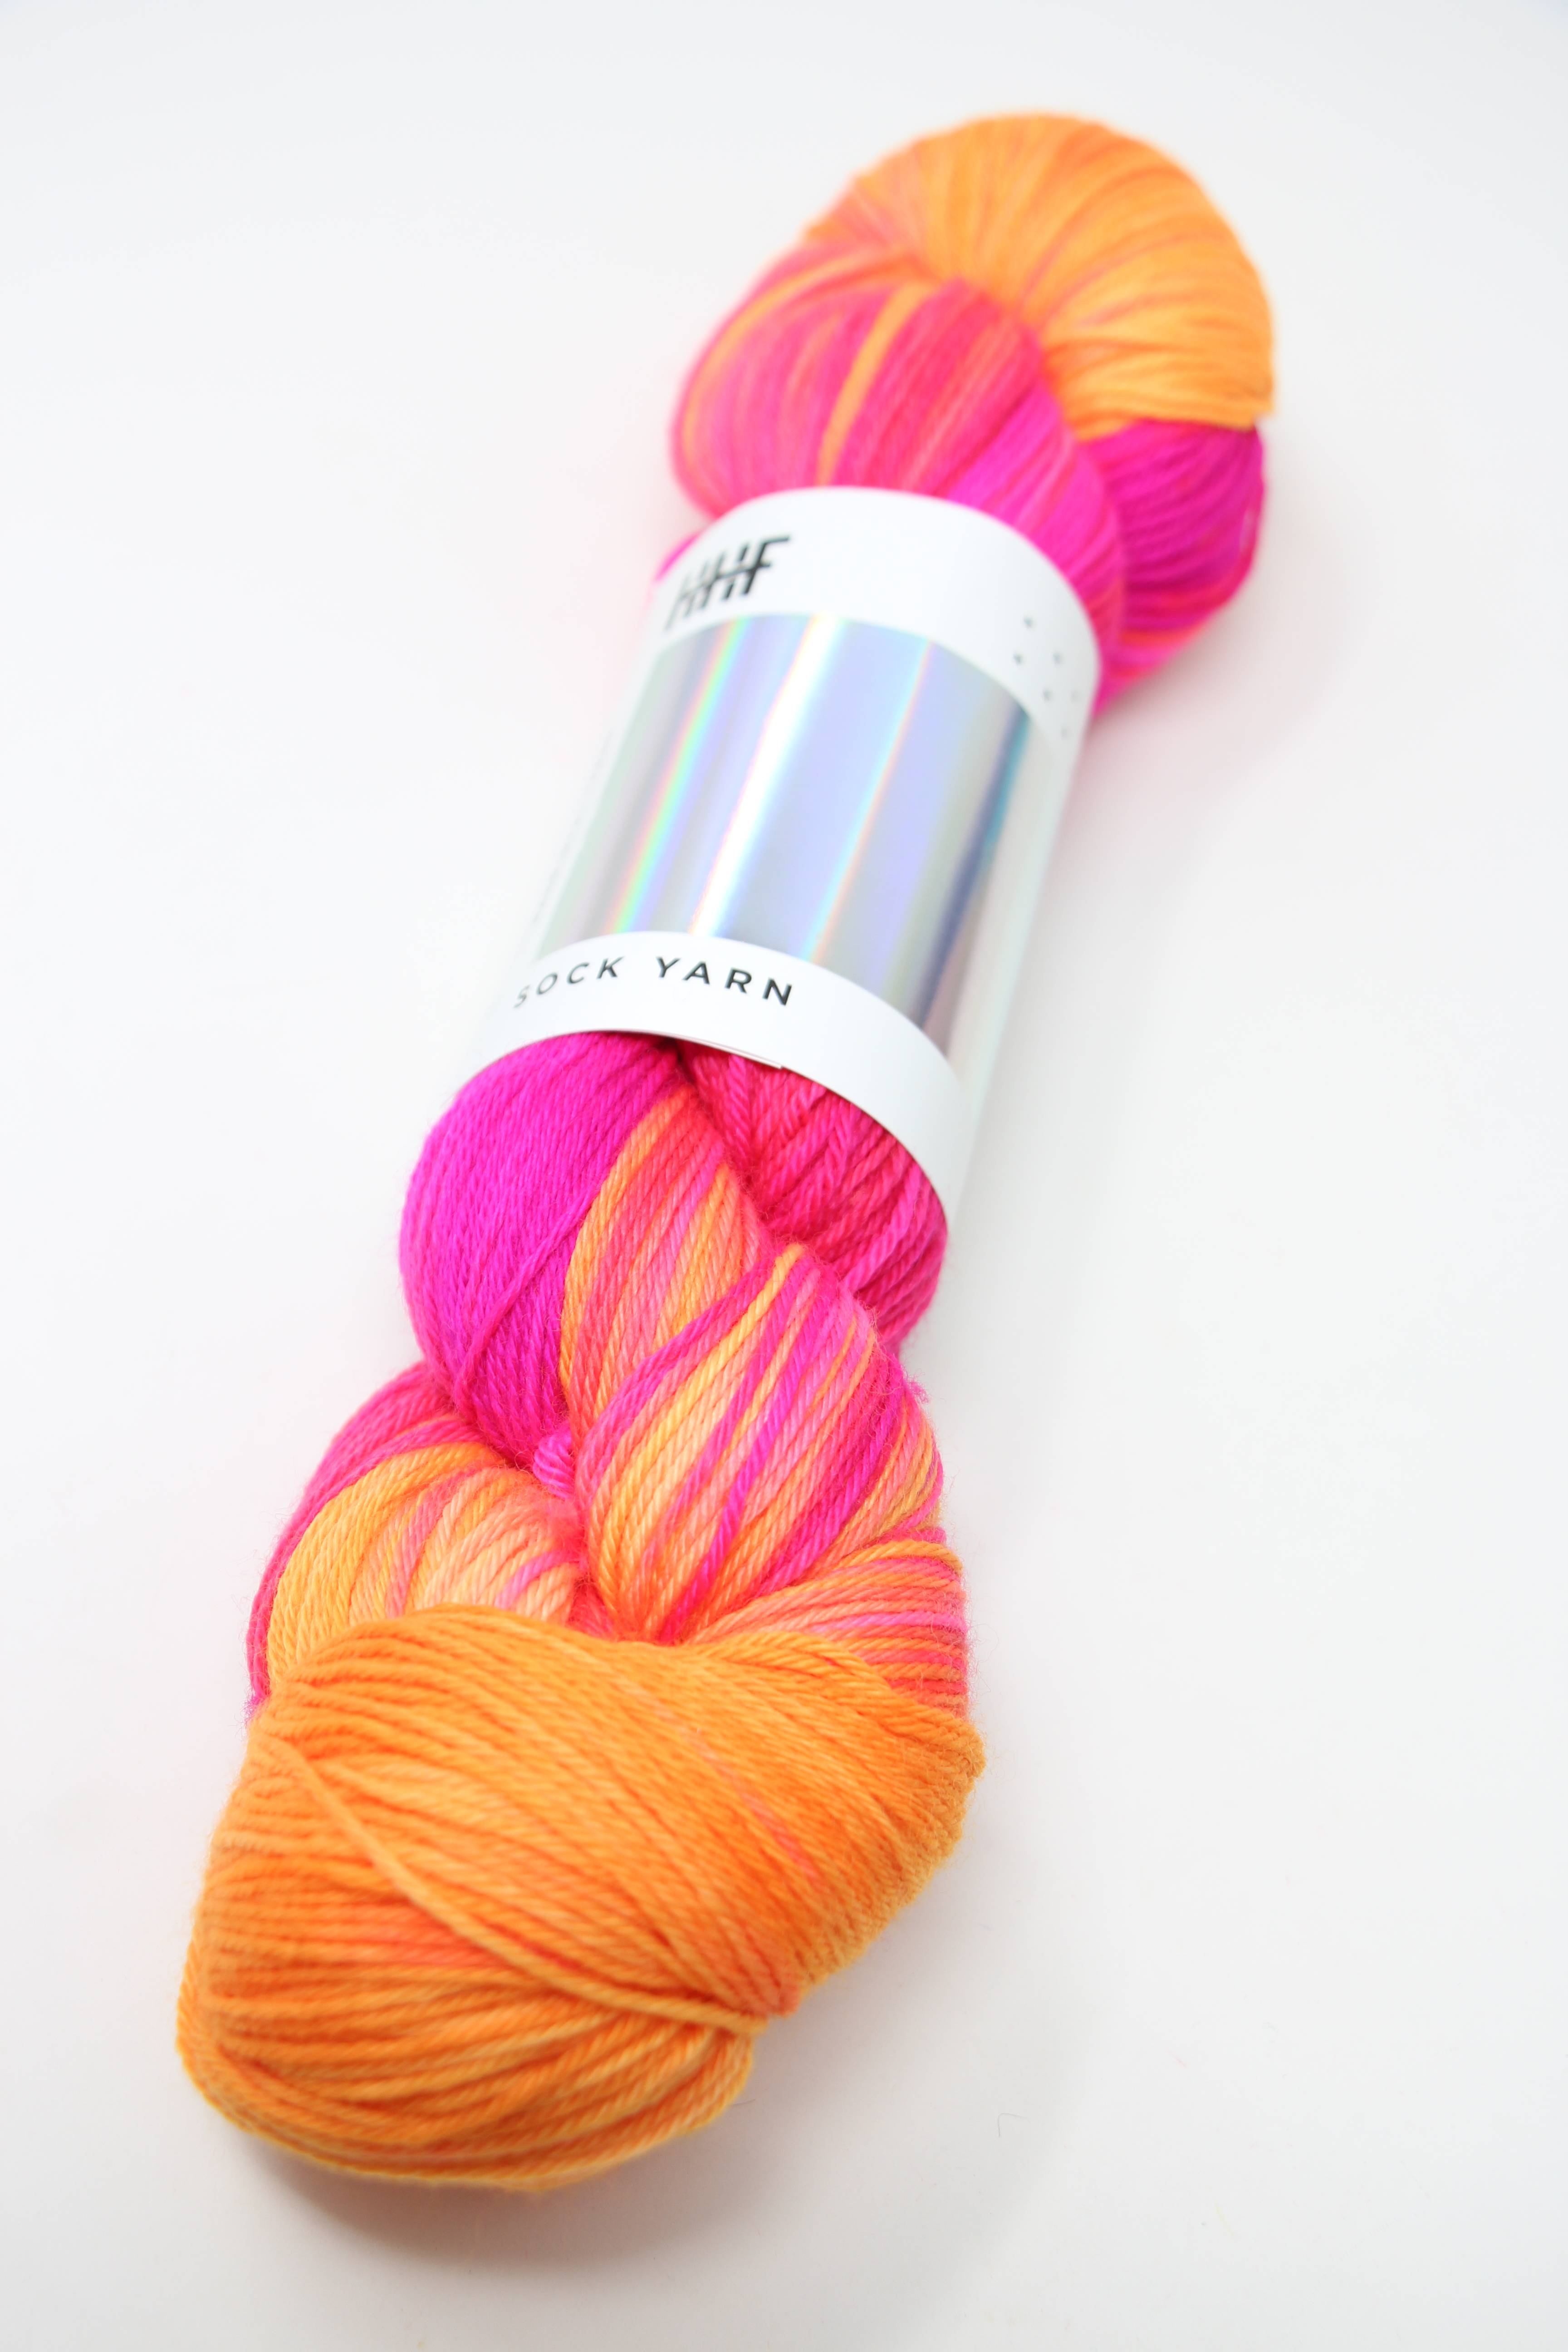 Hedgehog Fibres Sock yarn in color Cinder, 1 hank 